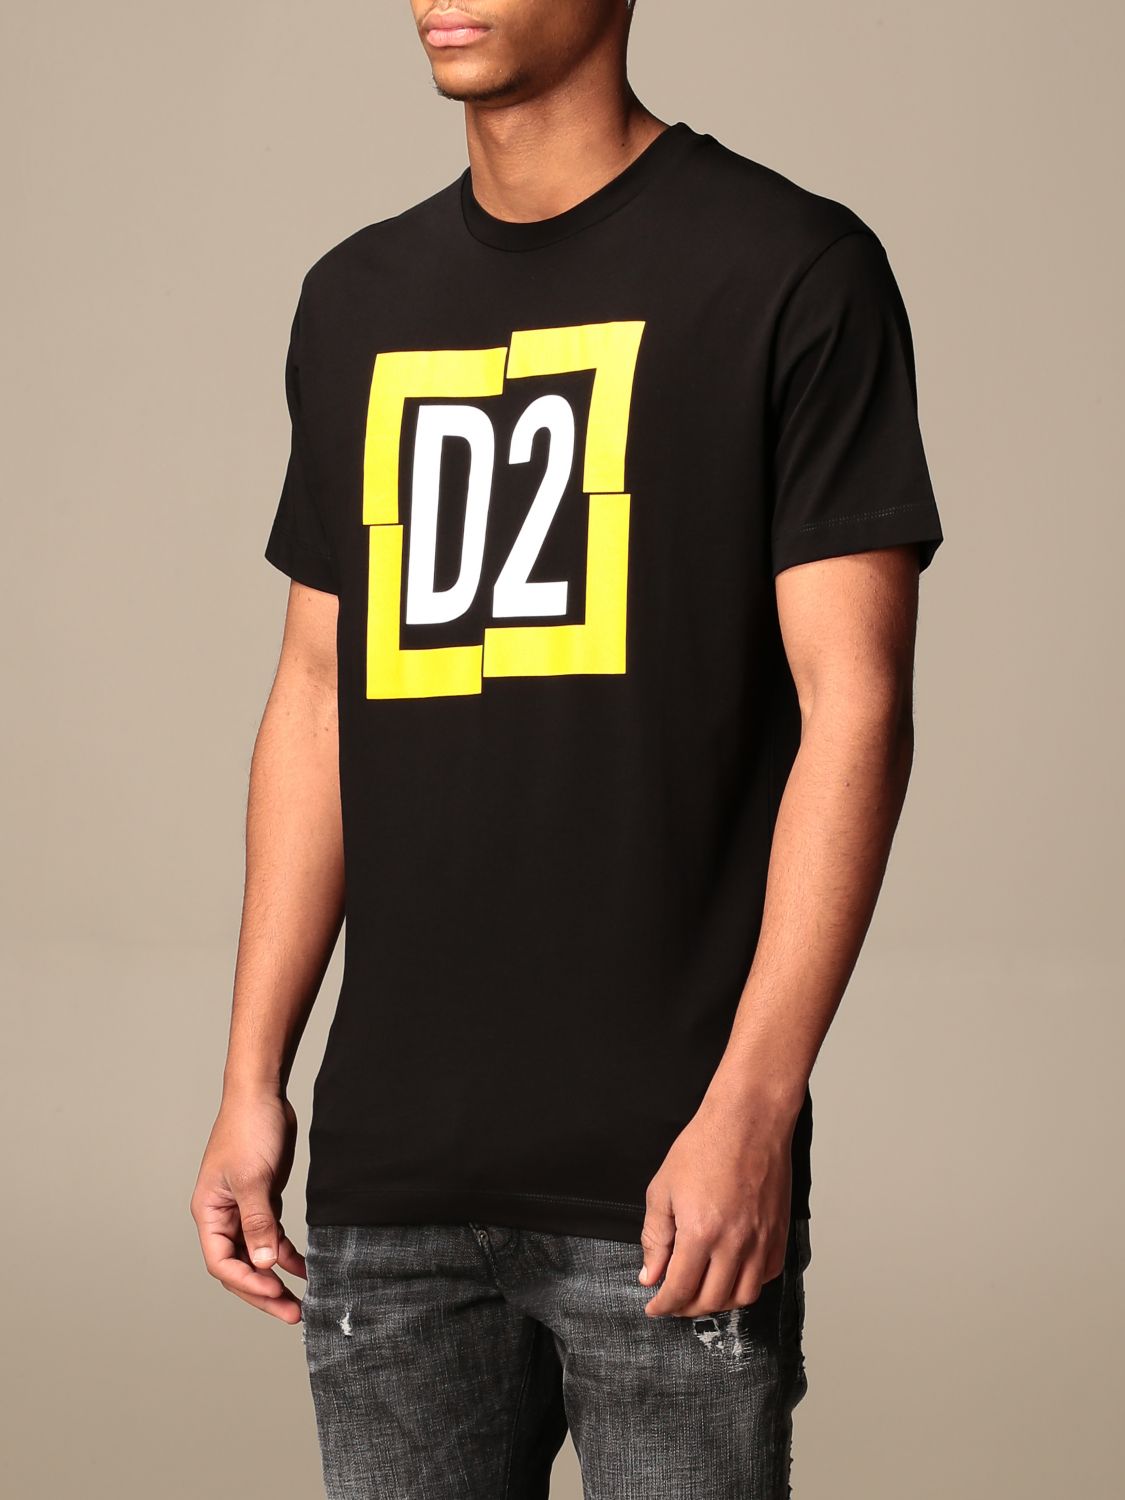 Dsquared2 basic t-shirt with logo